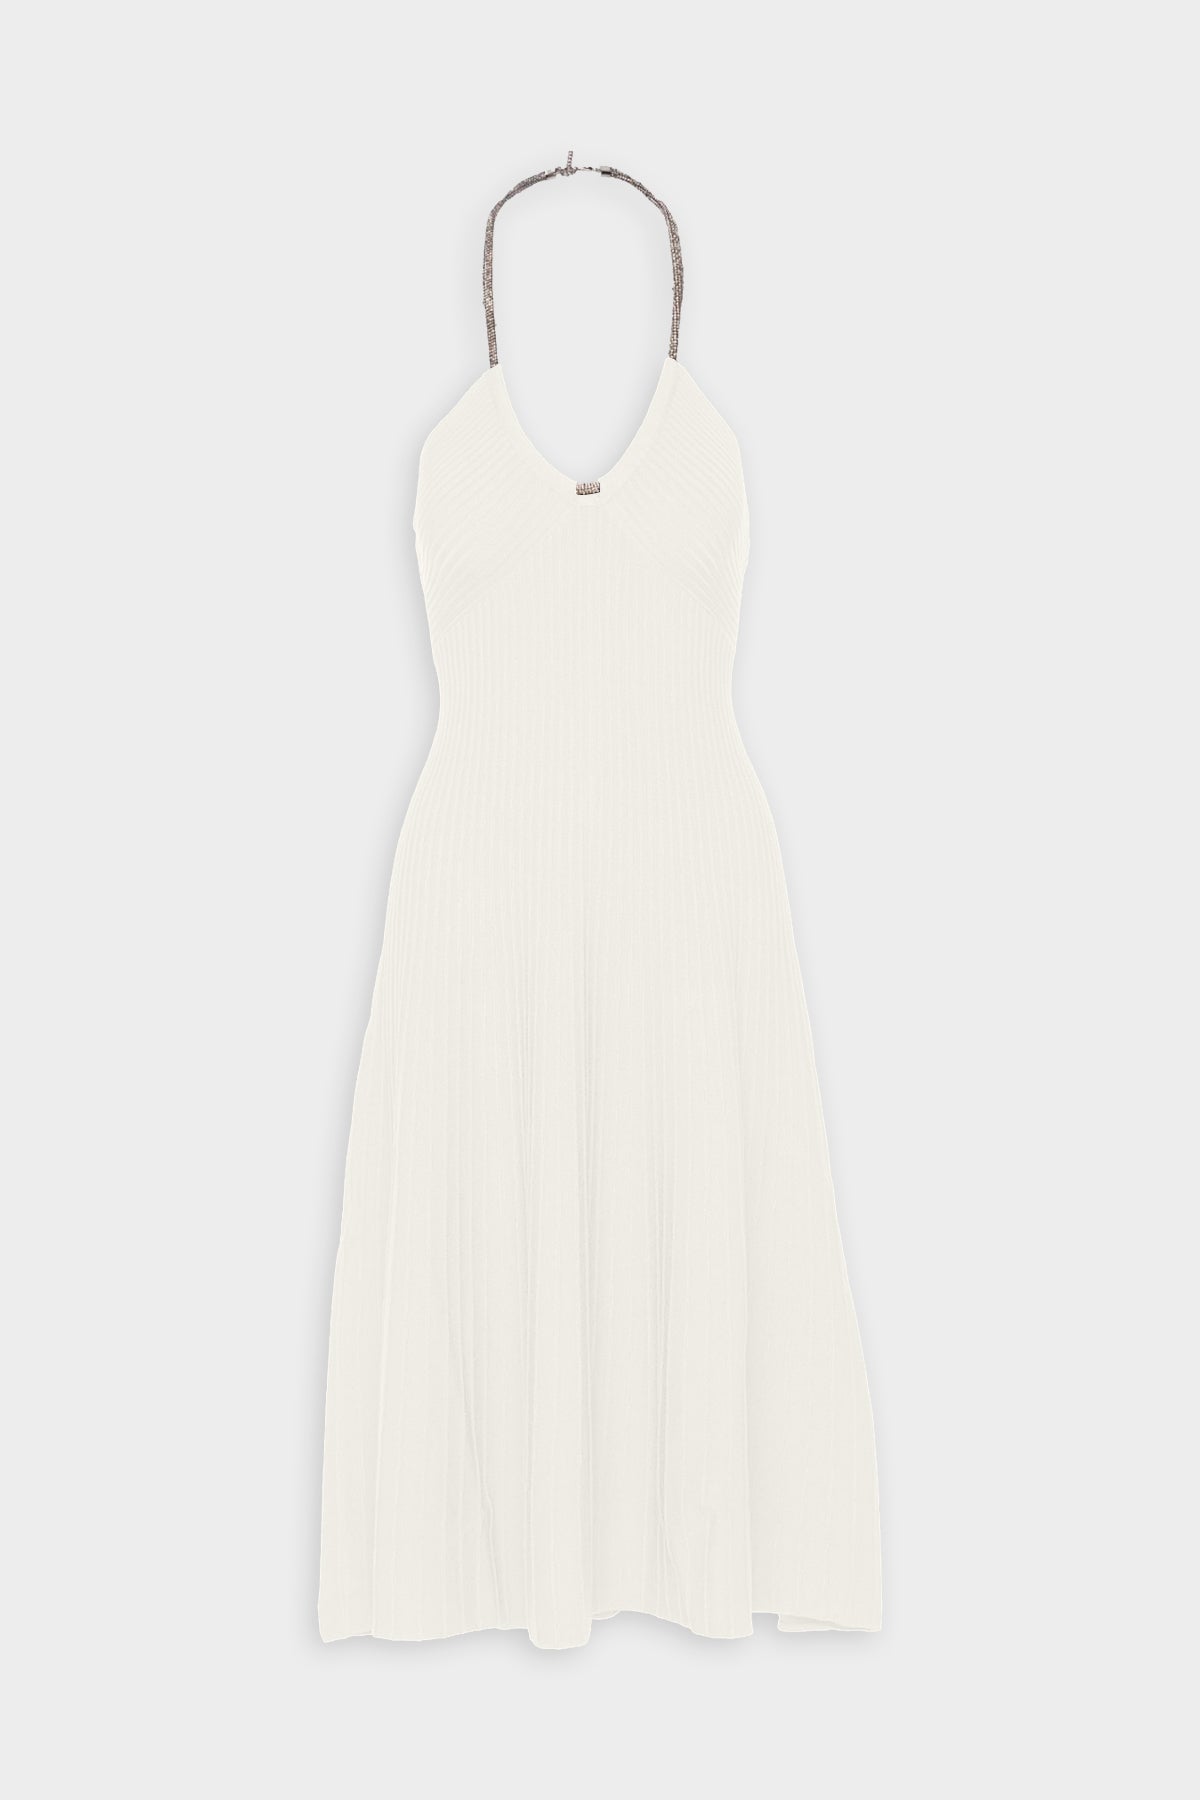 Sadira Crystal Halter Midi Dress in Ivory - shop-olivia.com